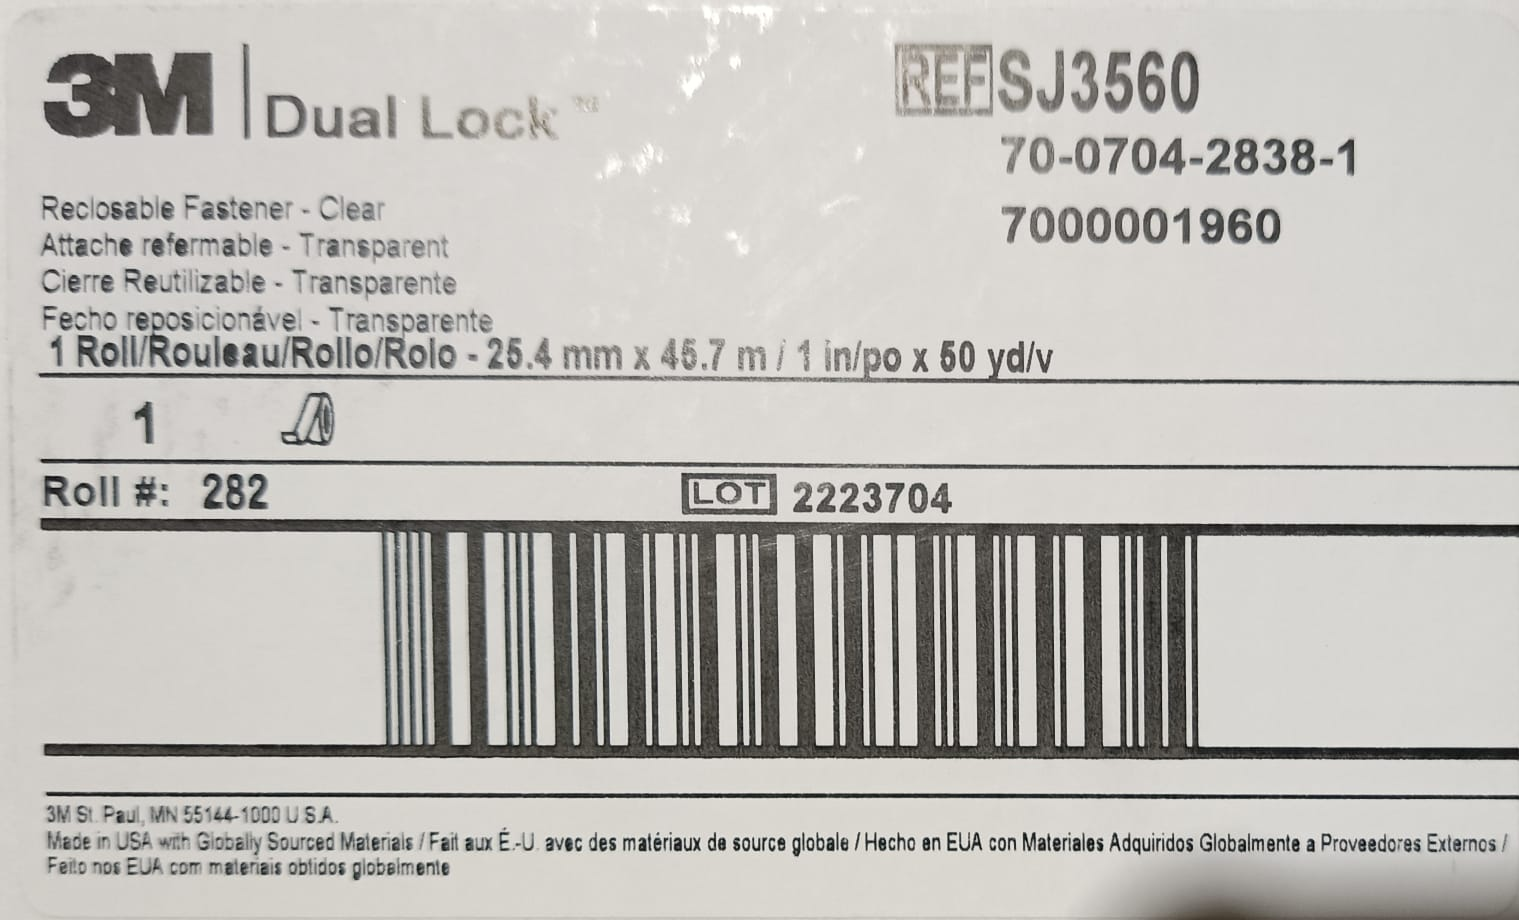 Застежка на клеевой основе VHB™ 3M™ Dual Lock™ SJ3560, 25мм*100мм, 2 штуки - фотография № 5